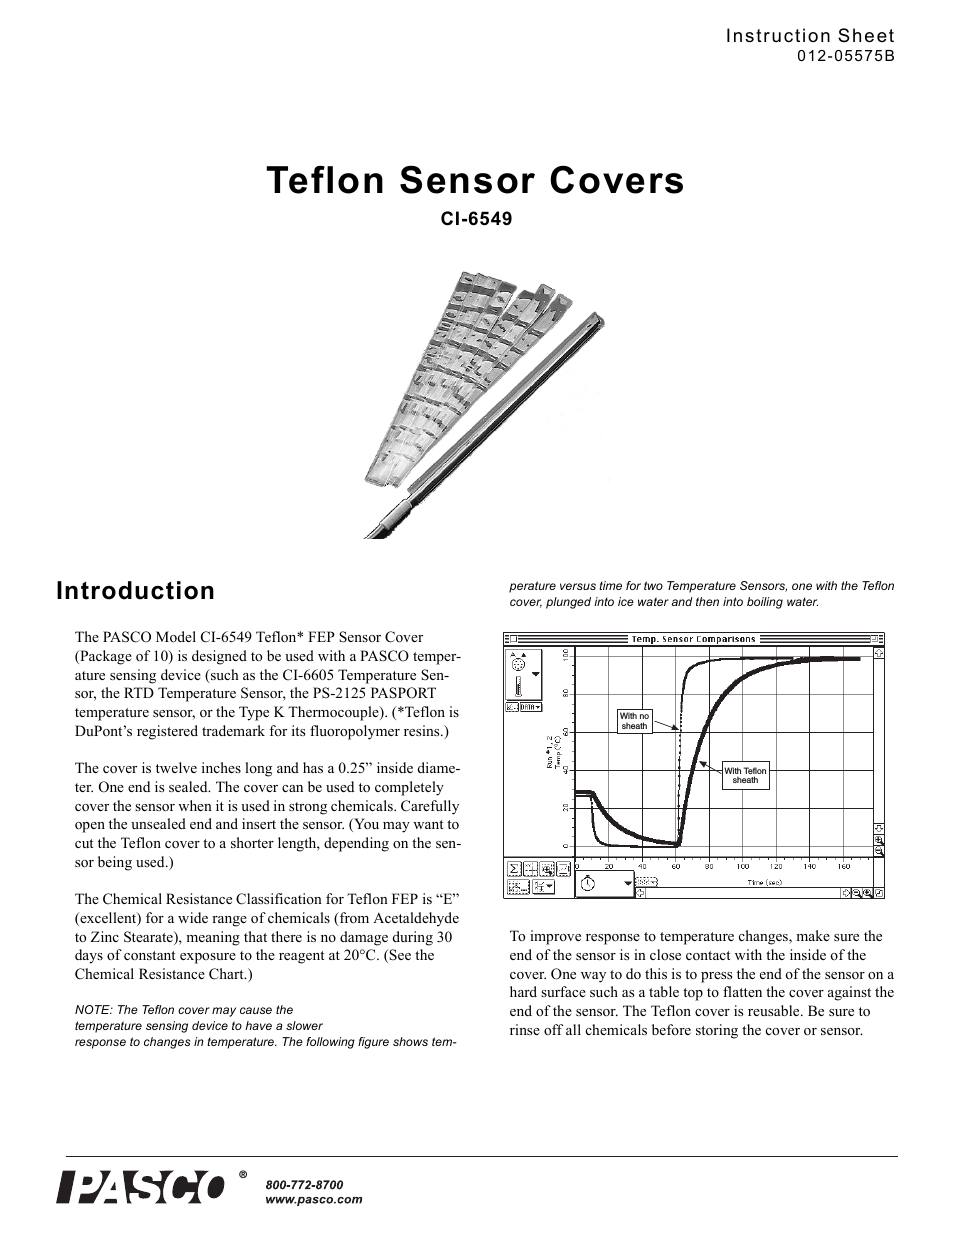 CI-6549 Teflon Sensor Covers